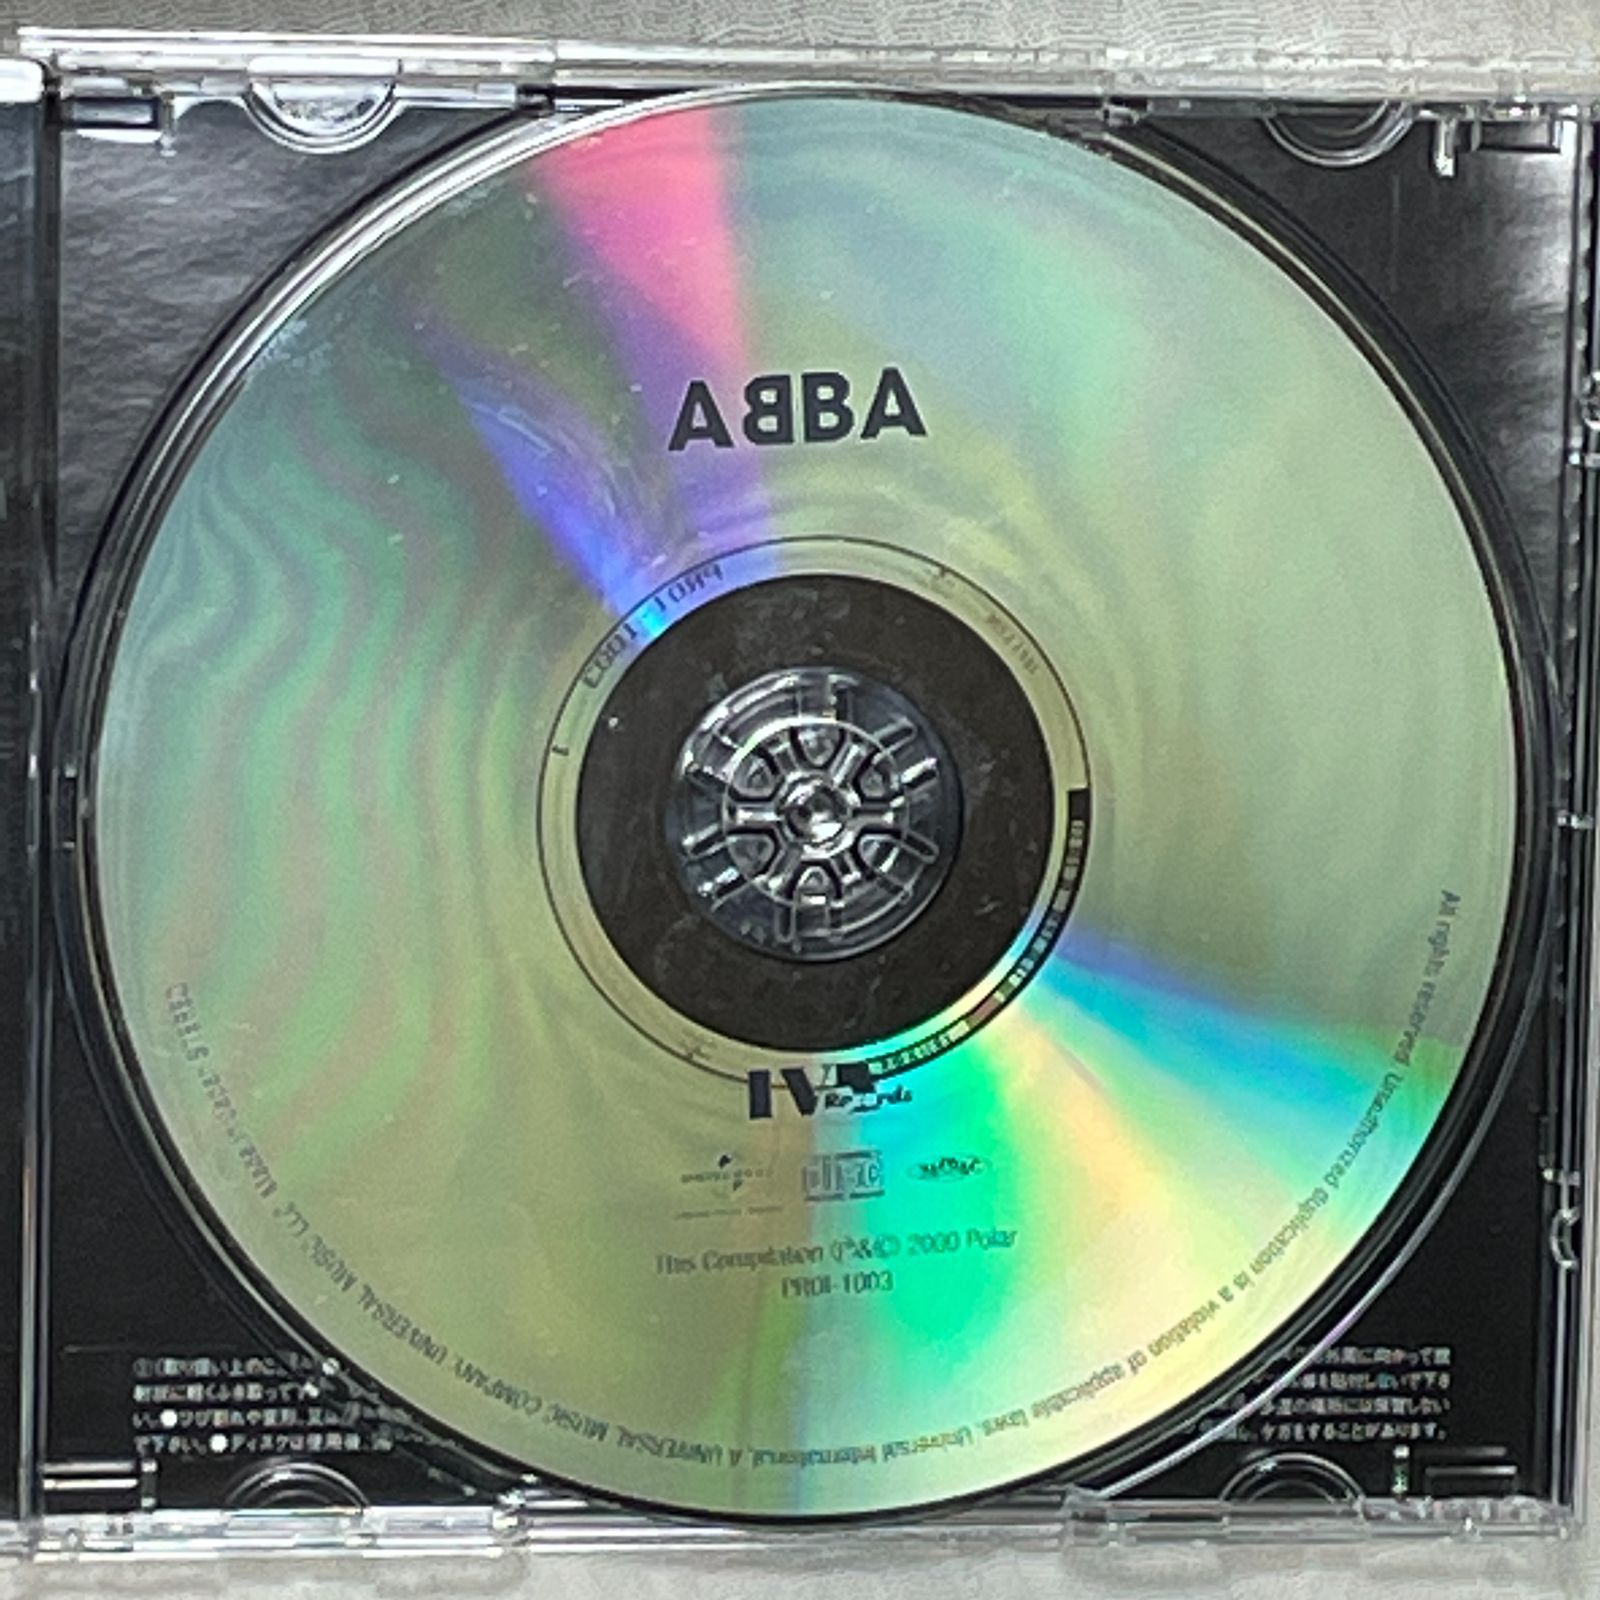 ABBA｜スーパー・ベスト（THE WINNER TAKES IT ALL THE ABBA STORY）｜中古CD｜ベスト アルバム｜アバ -  メルカリ